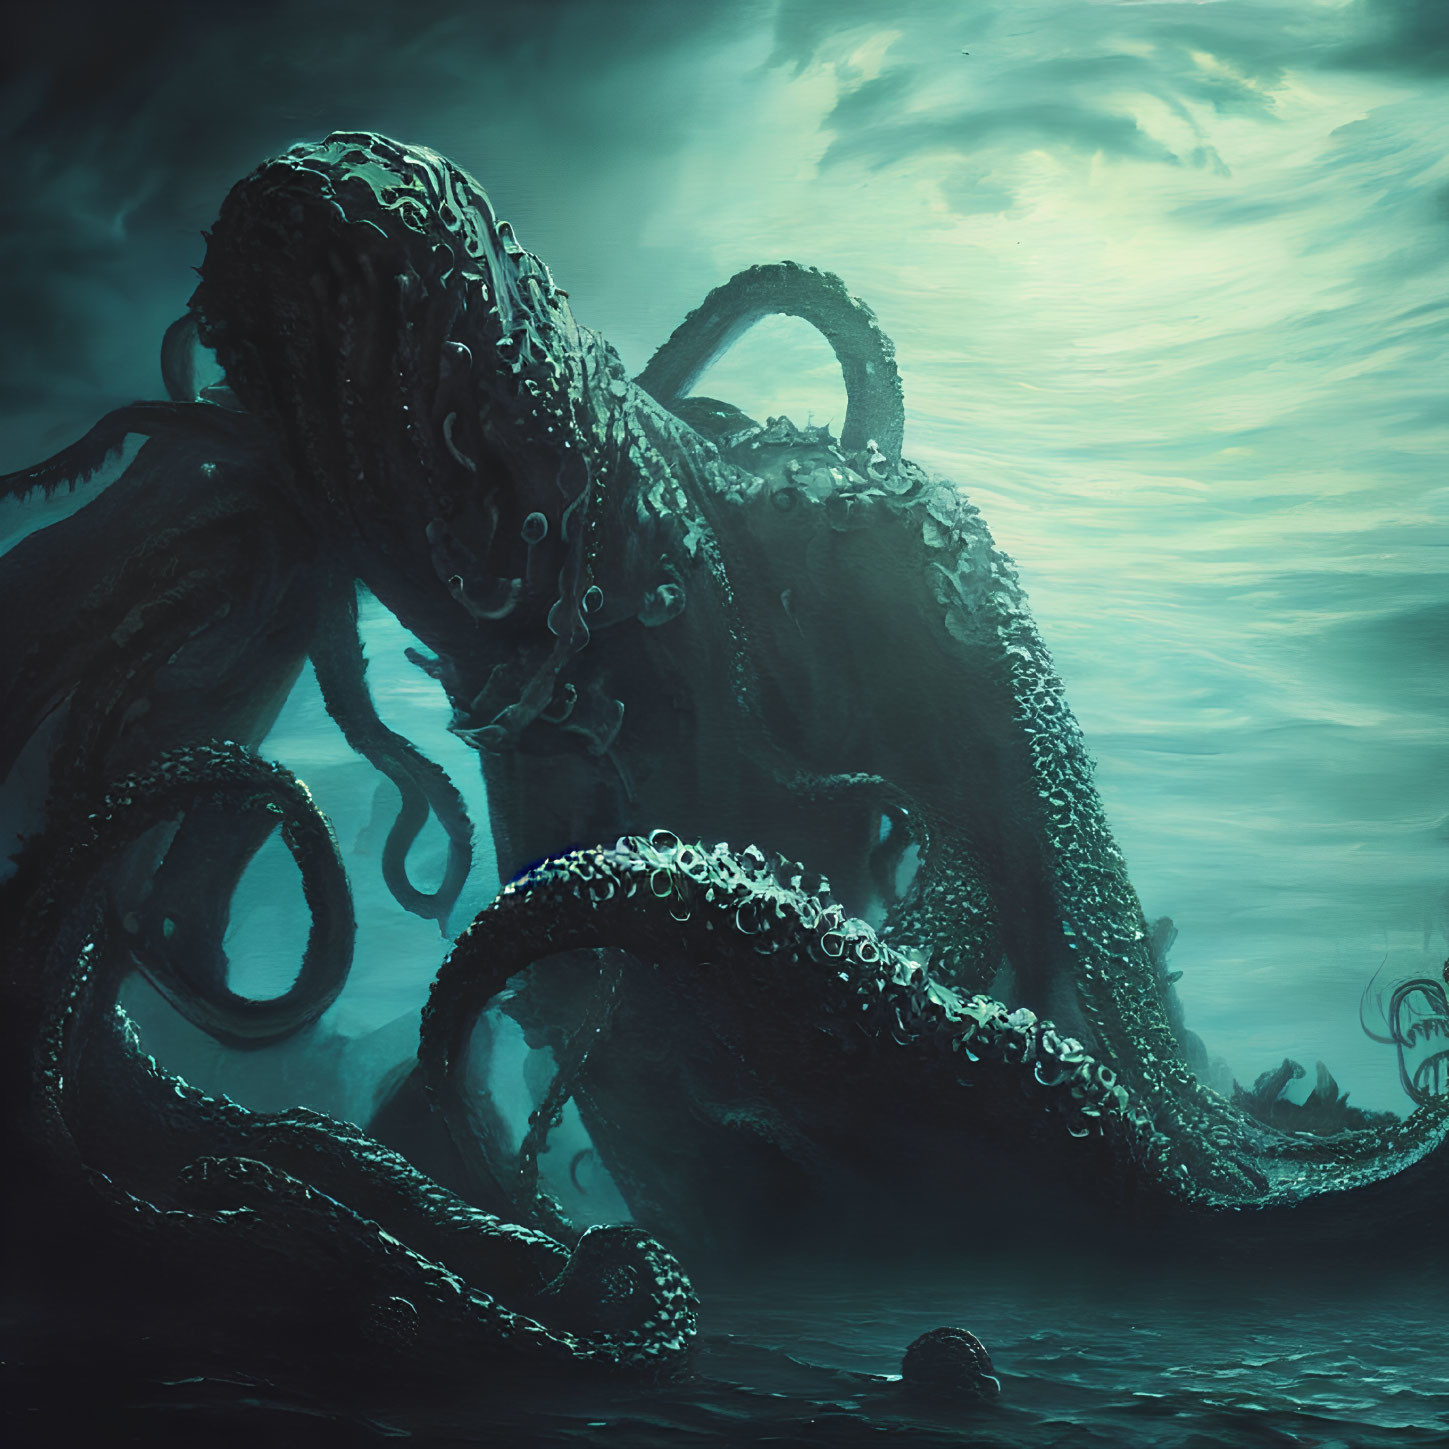 Gigantic dark octopus emerges in stormy ocean scene